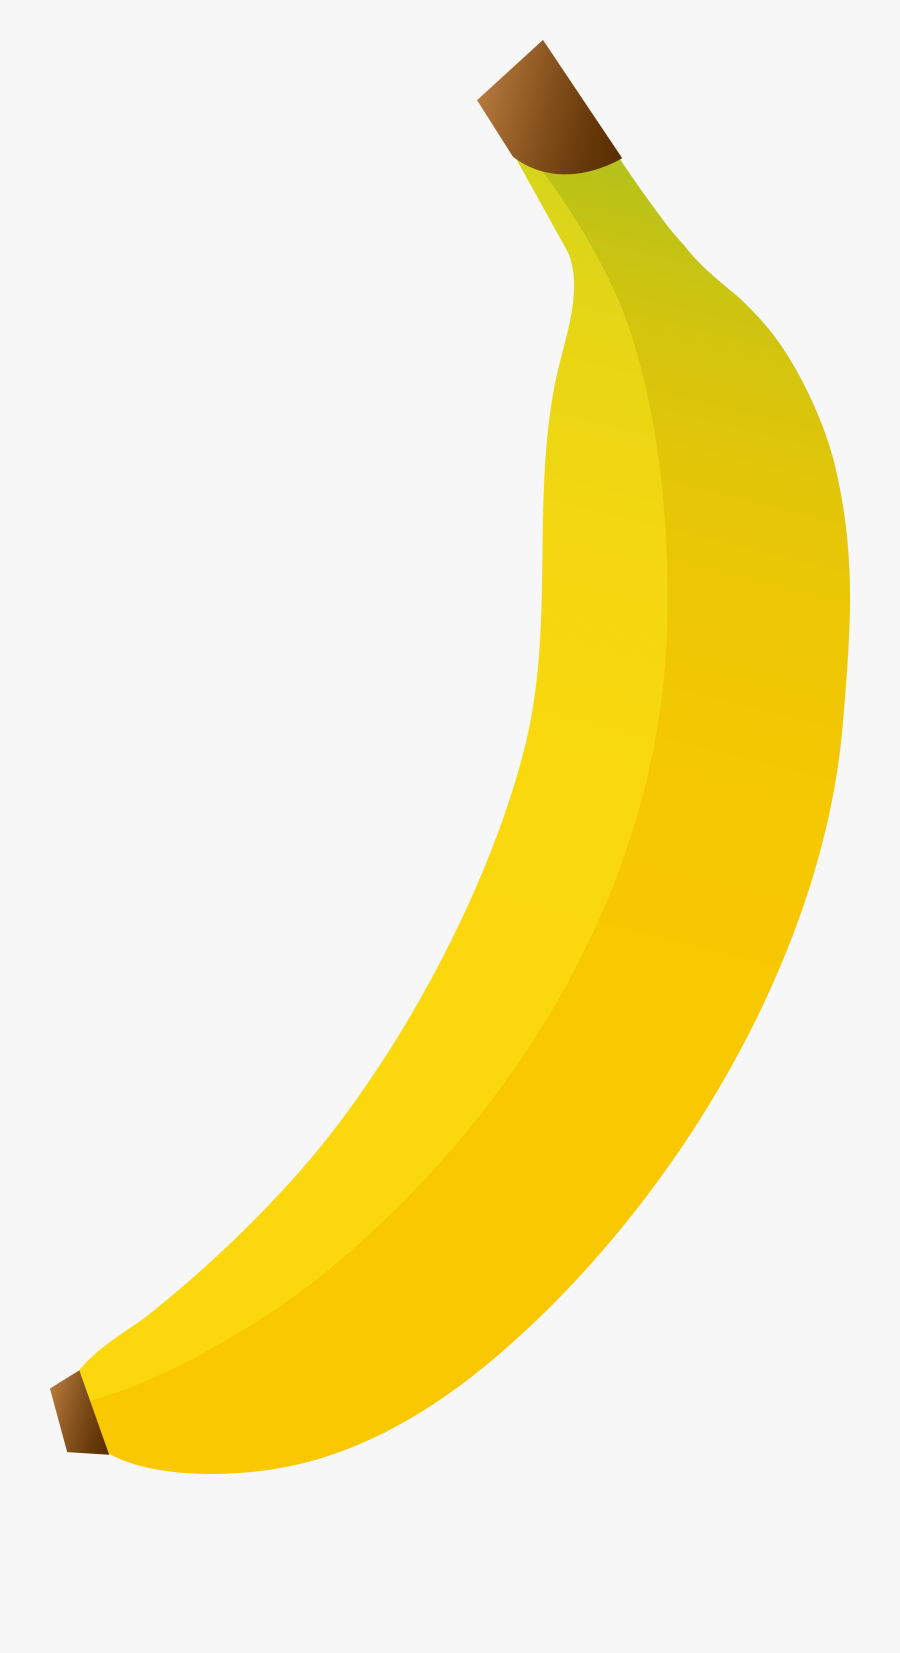 Banana Clipart Png Image - Transparent Background Banana Clipart Png, Transparent Clipart